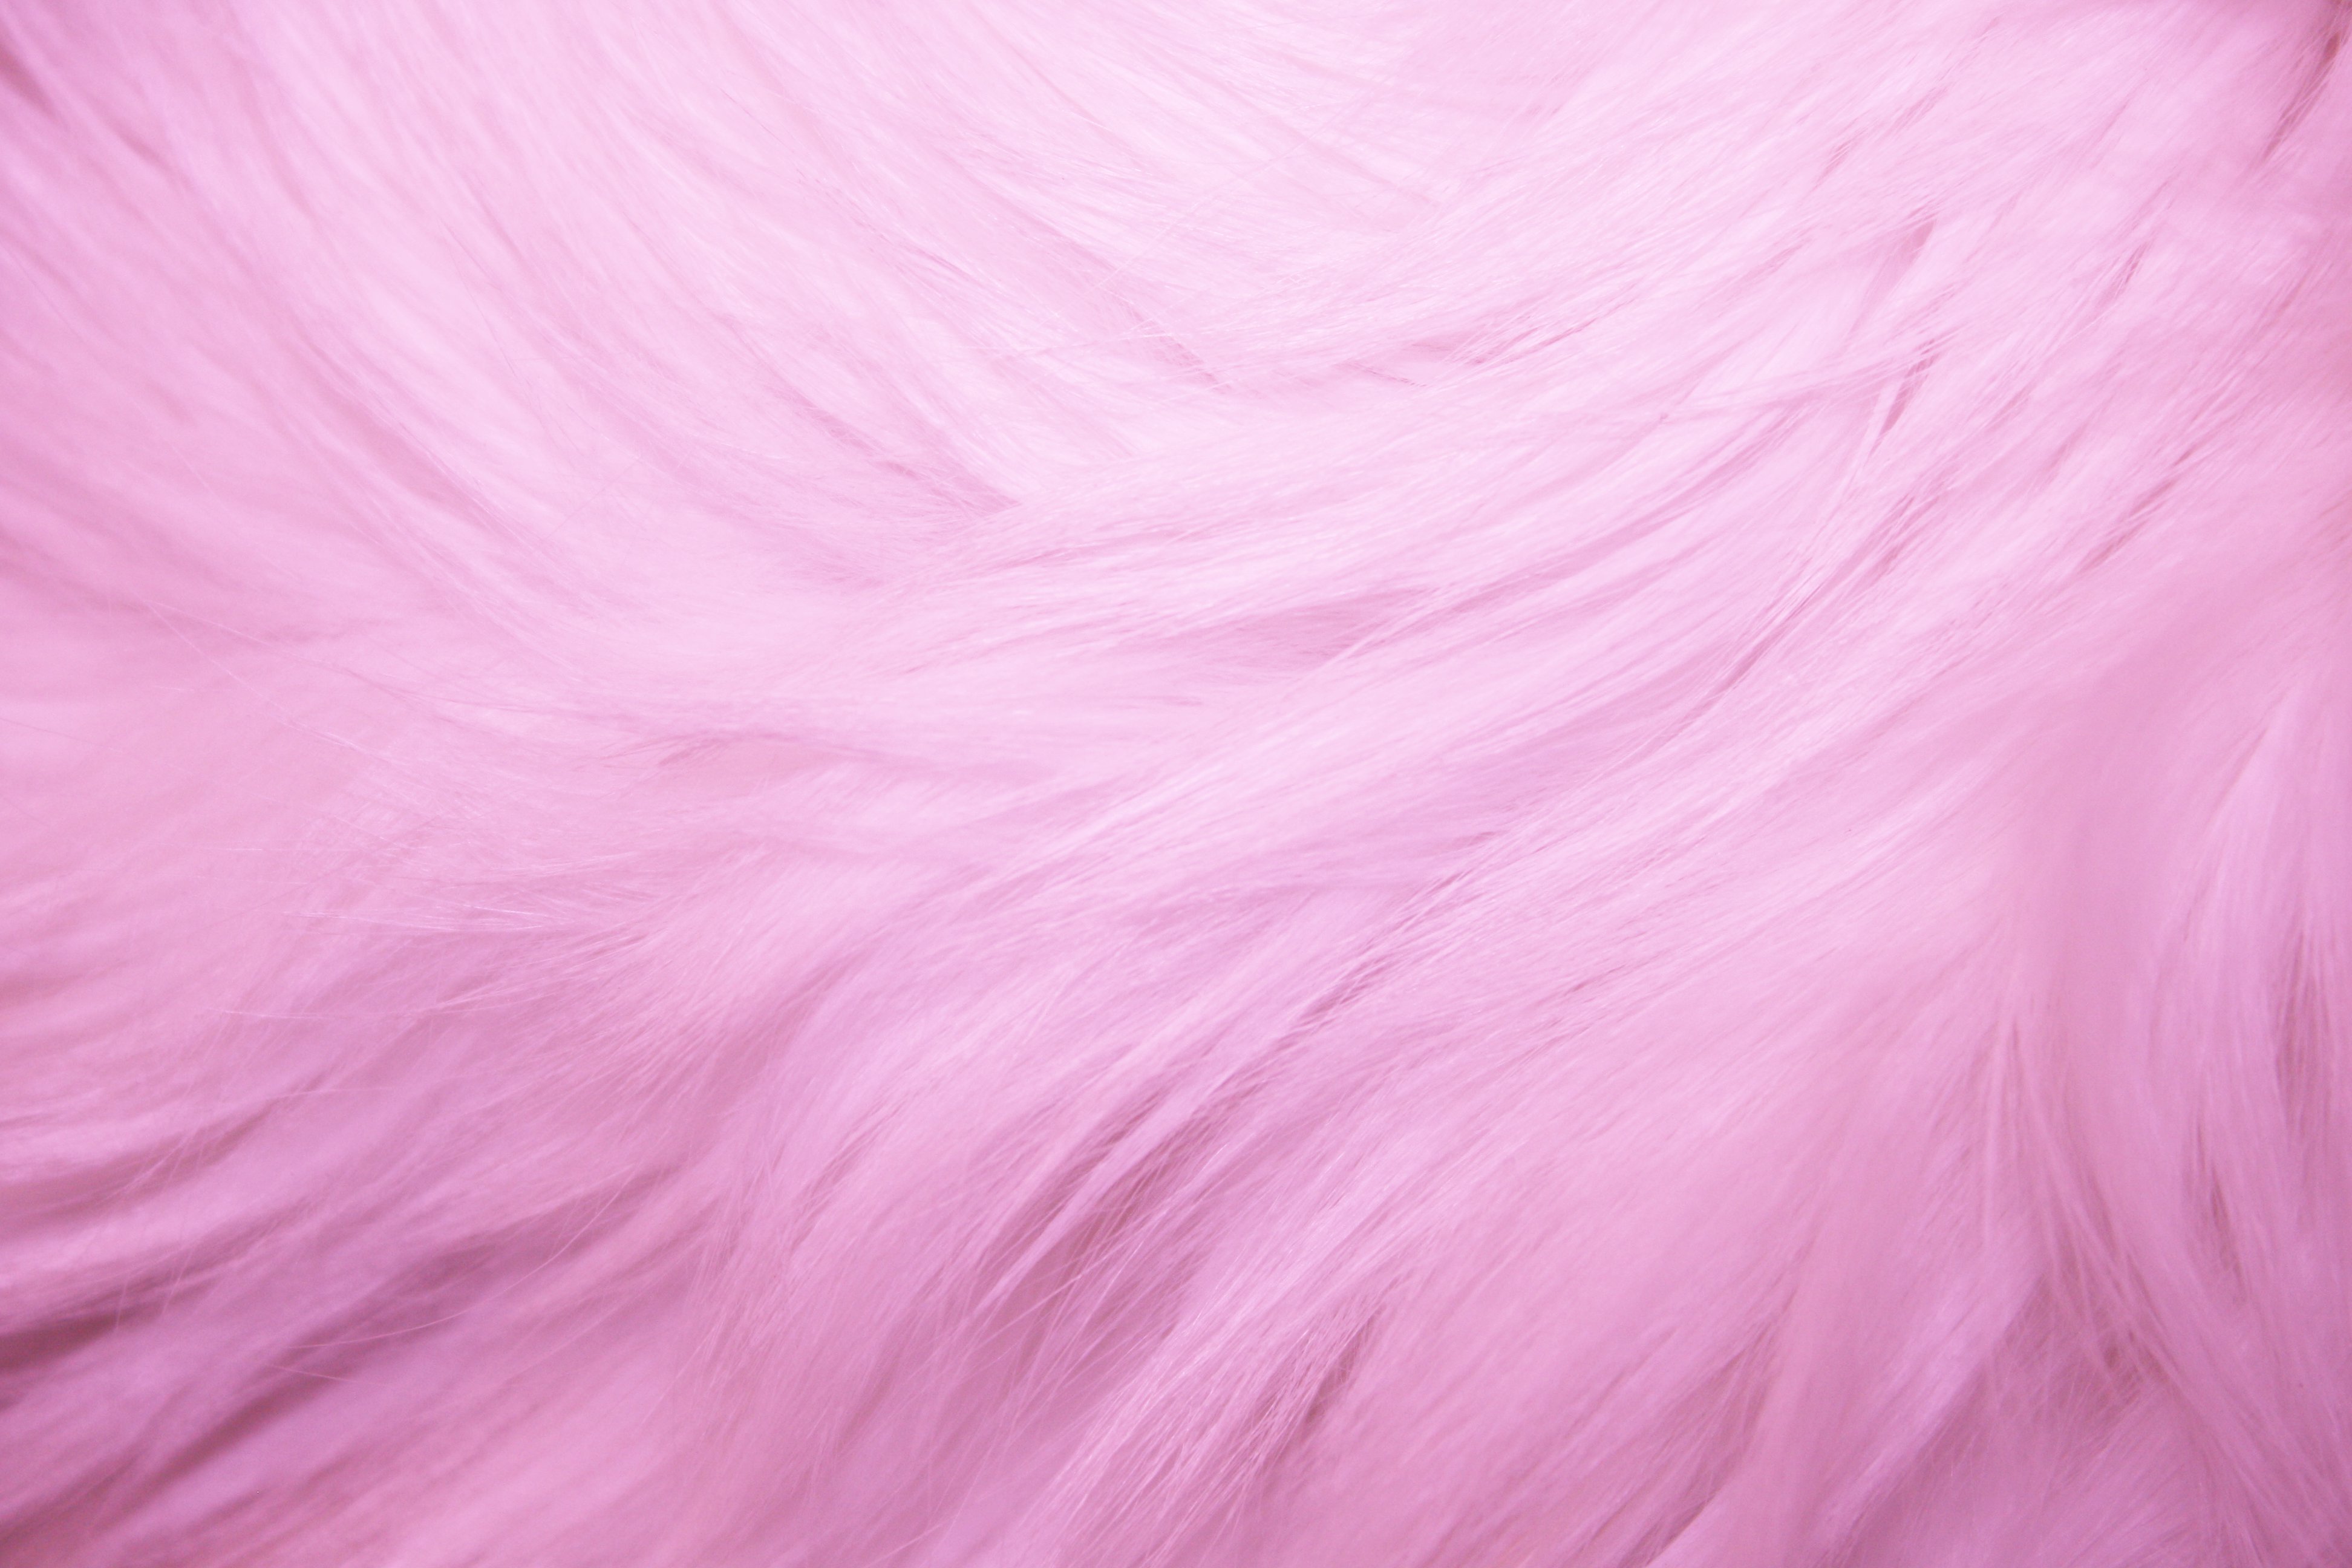 Pink Fur Pictures  Download Free Images on Unsplash